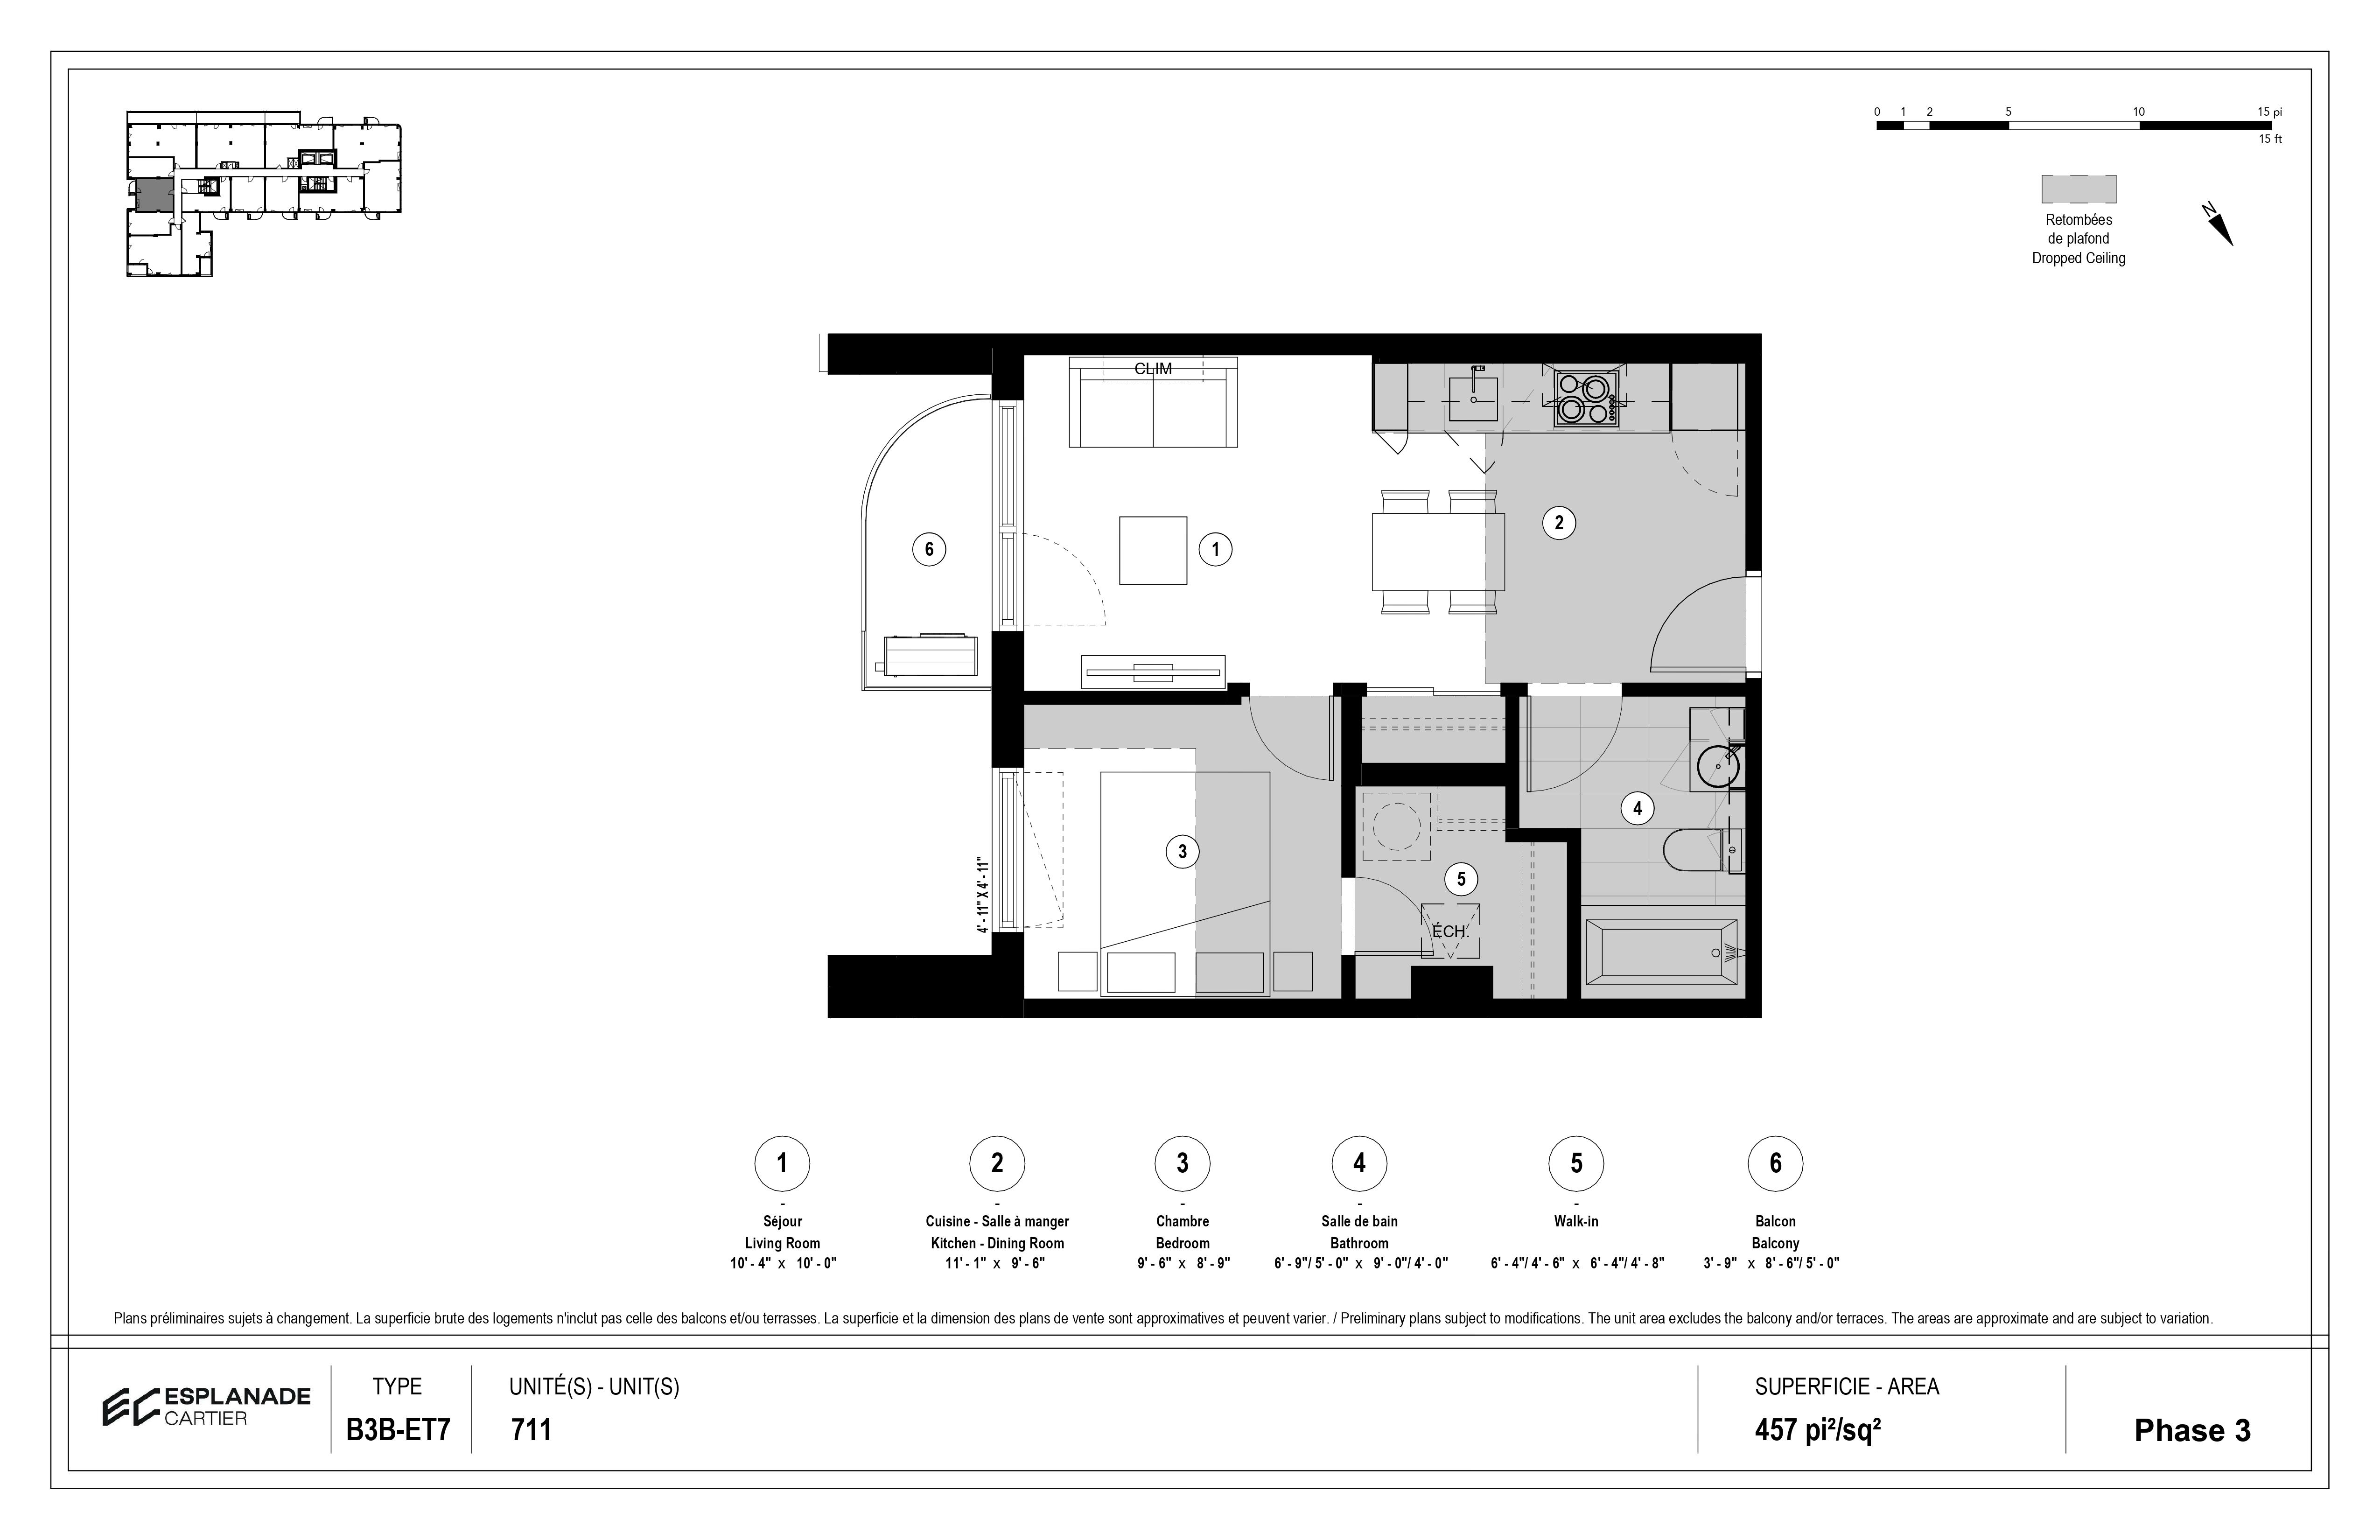  Floor Plan of Esplanade Cartier - Phase 3 Condos with undefined beds